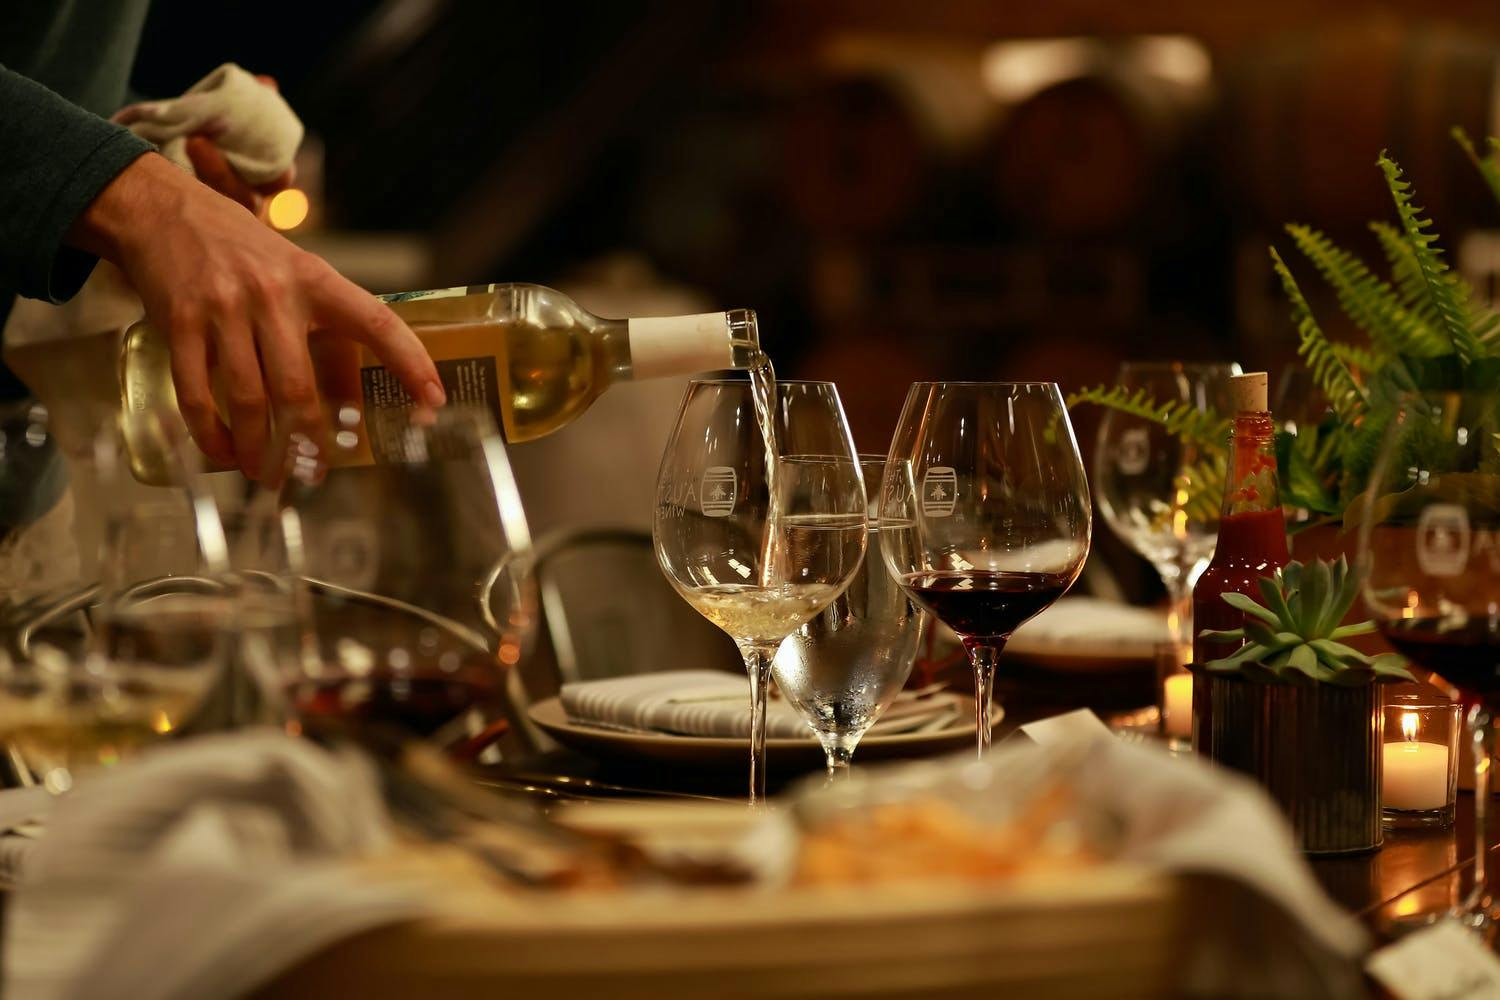 Wine pairings at intimate winery dinner | PartySlate